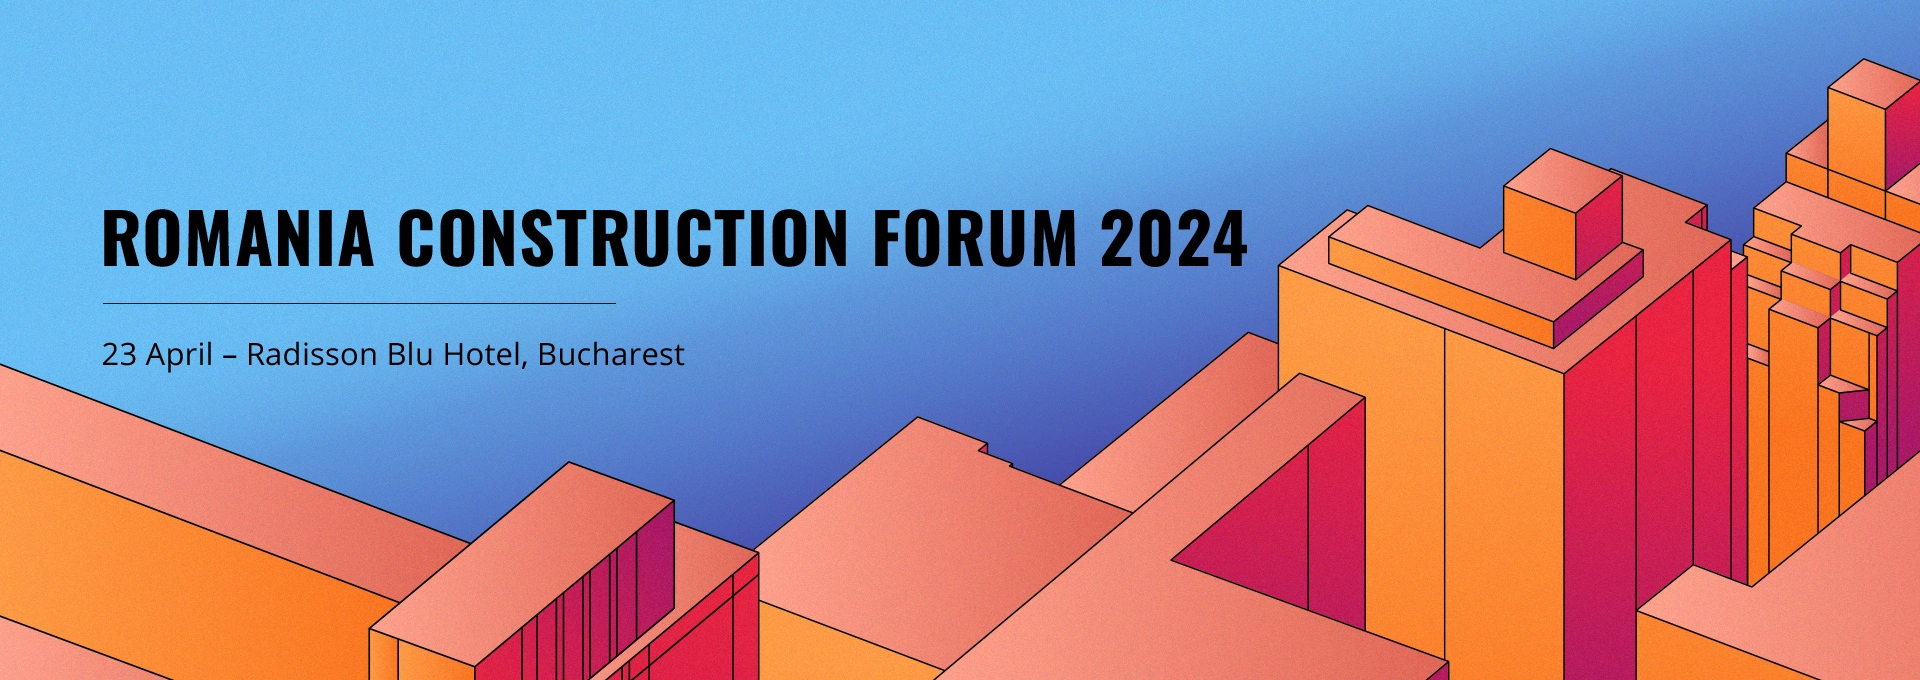 Romania Construction Forum 2024